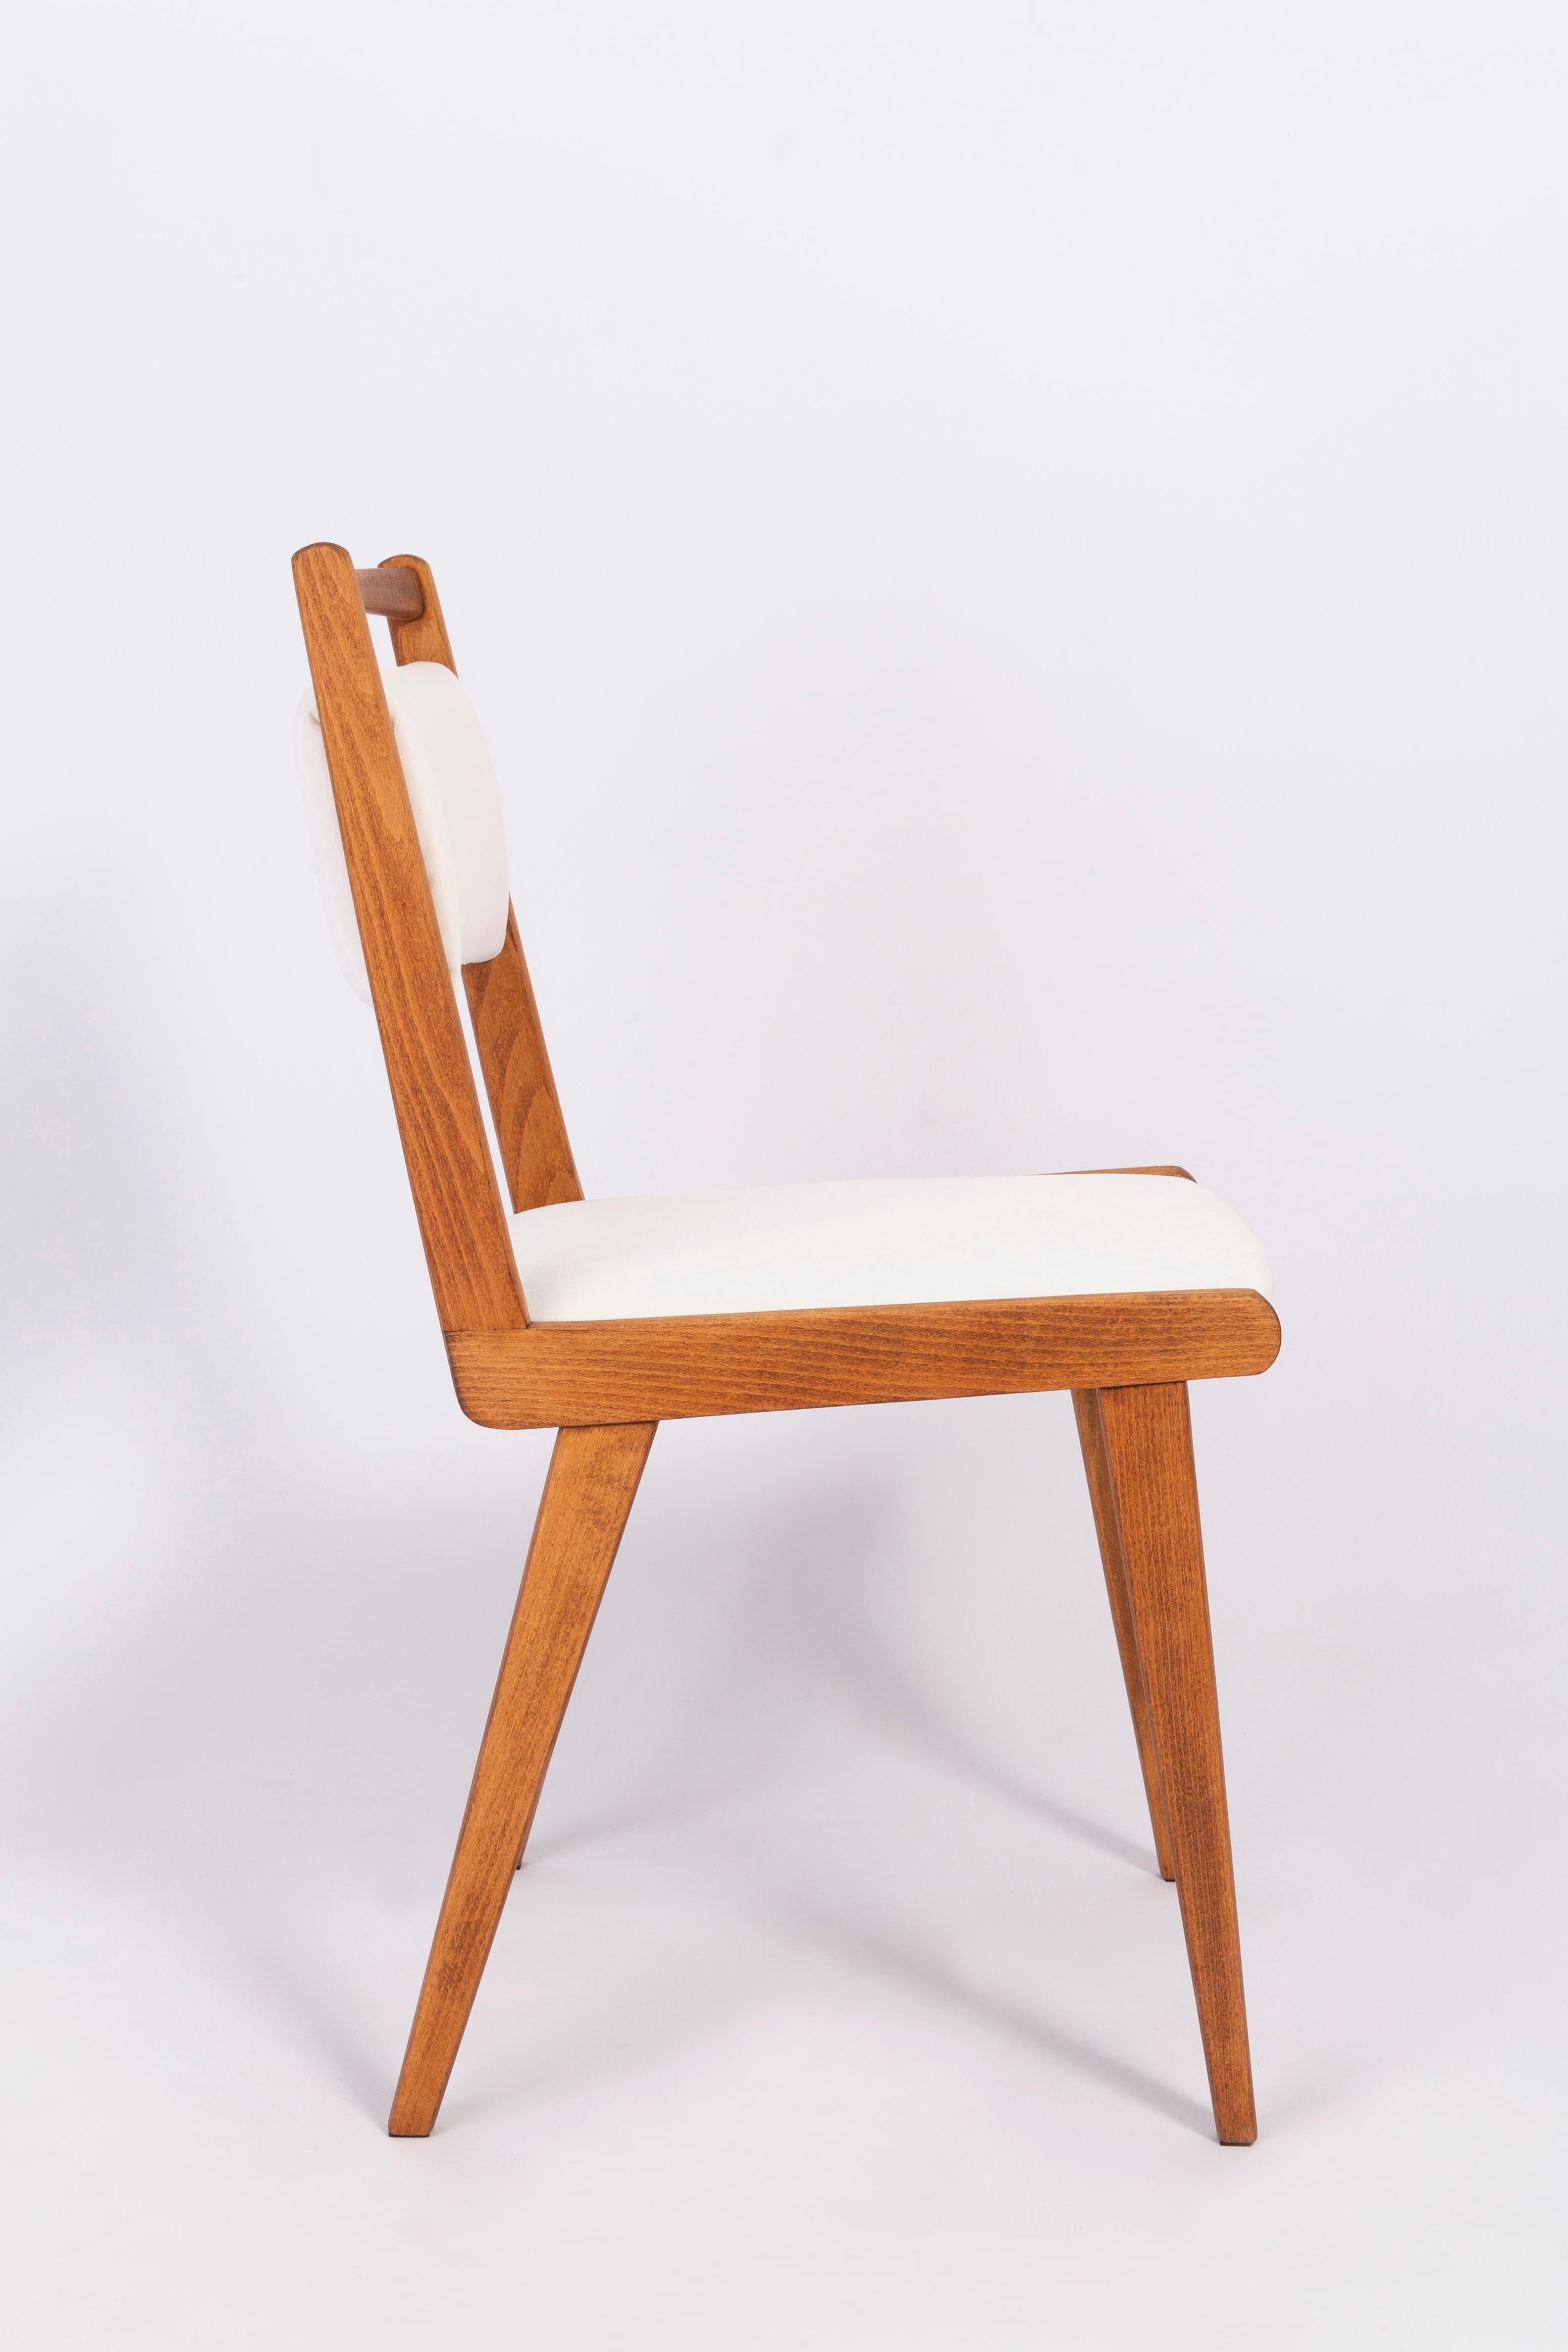 Set of Four 20th Century White Velvet Chairs, Poland, 1960s For Sale 1